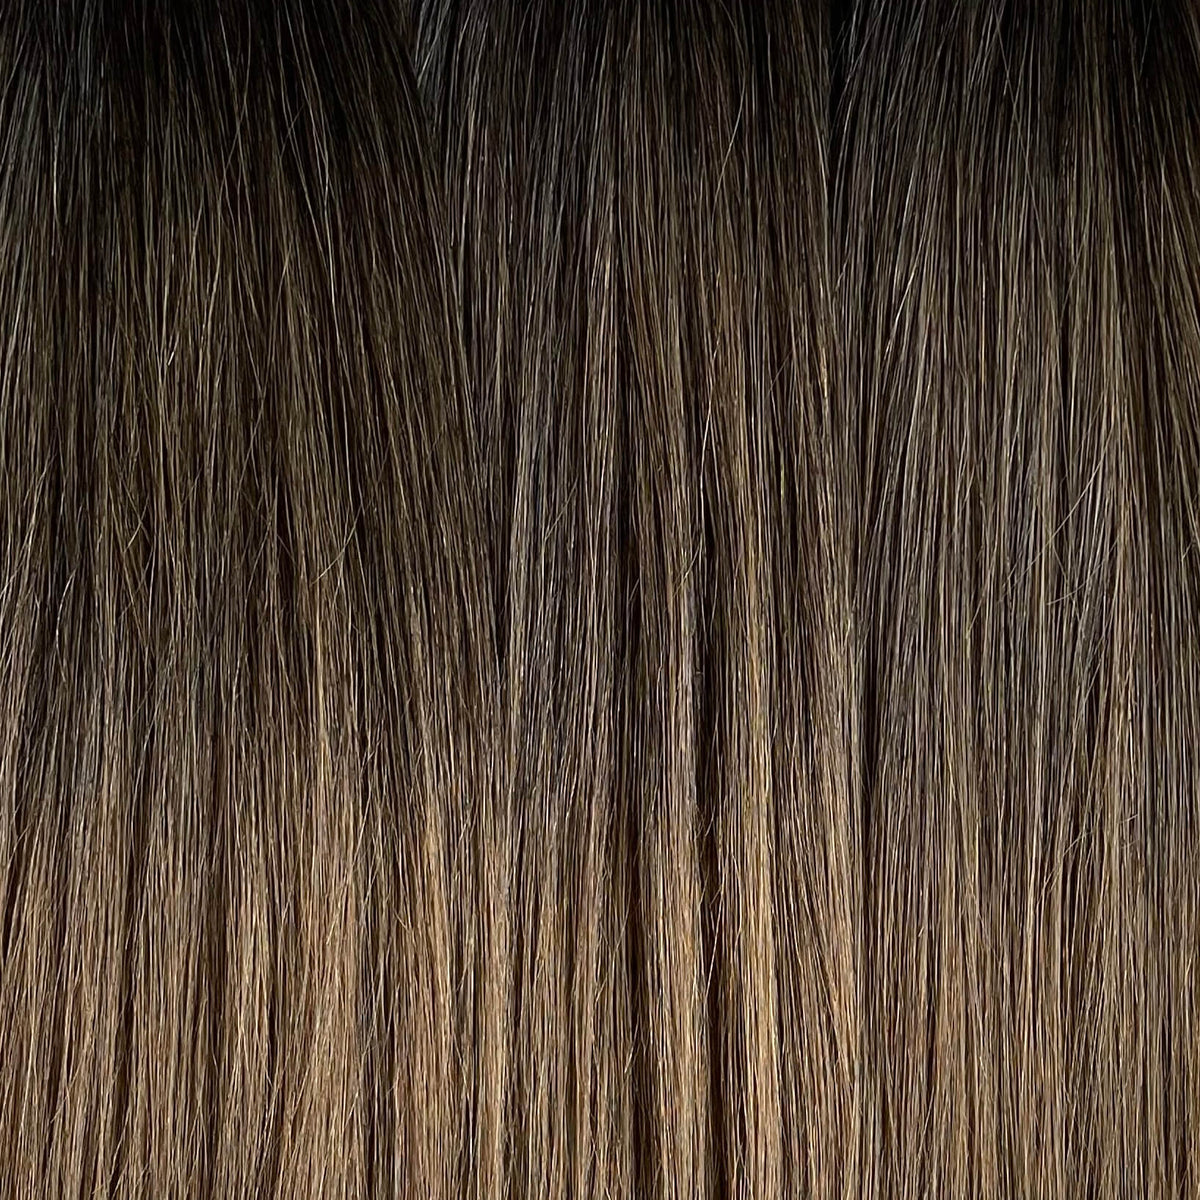 desert bronze narrow edge hair extension closeup